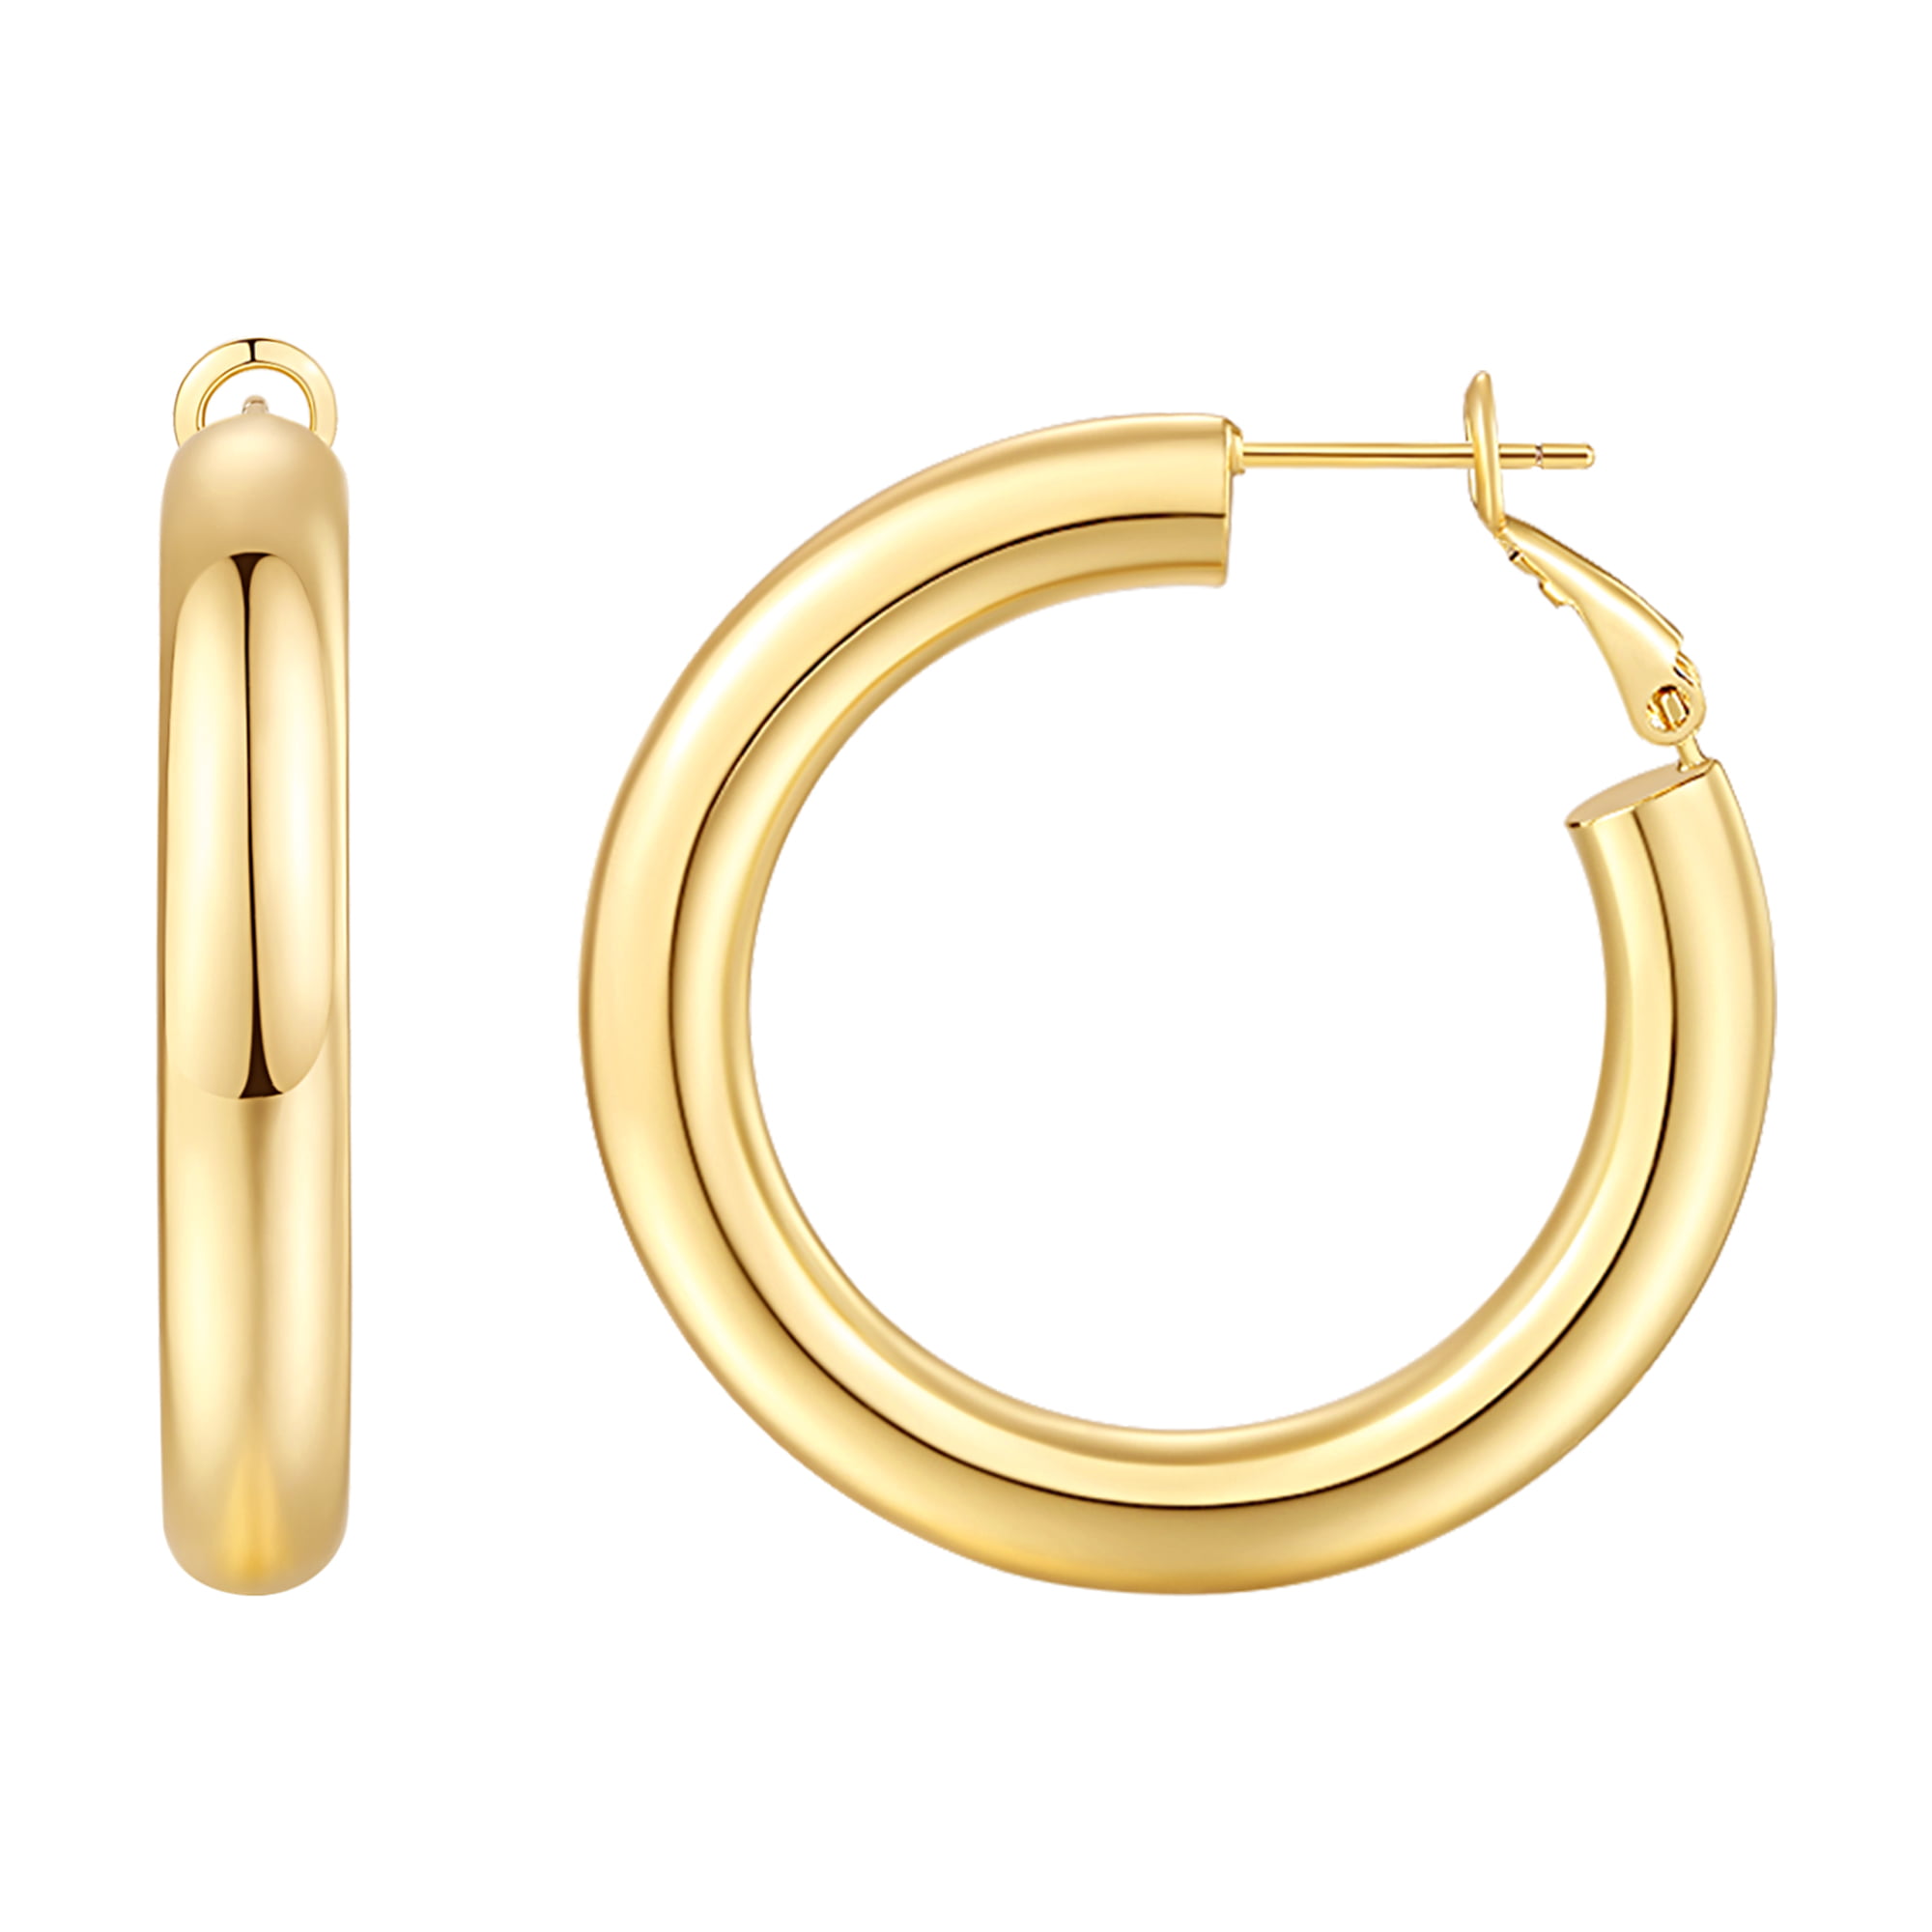 Wowshow Gold Earrings, 25-50mm Chunky Open Hoops for Women Lightweight ...